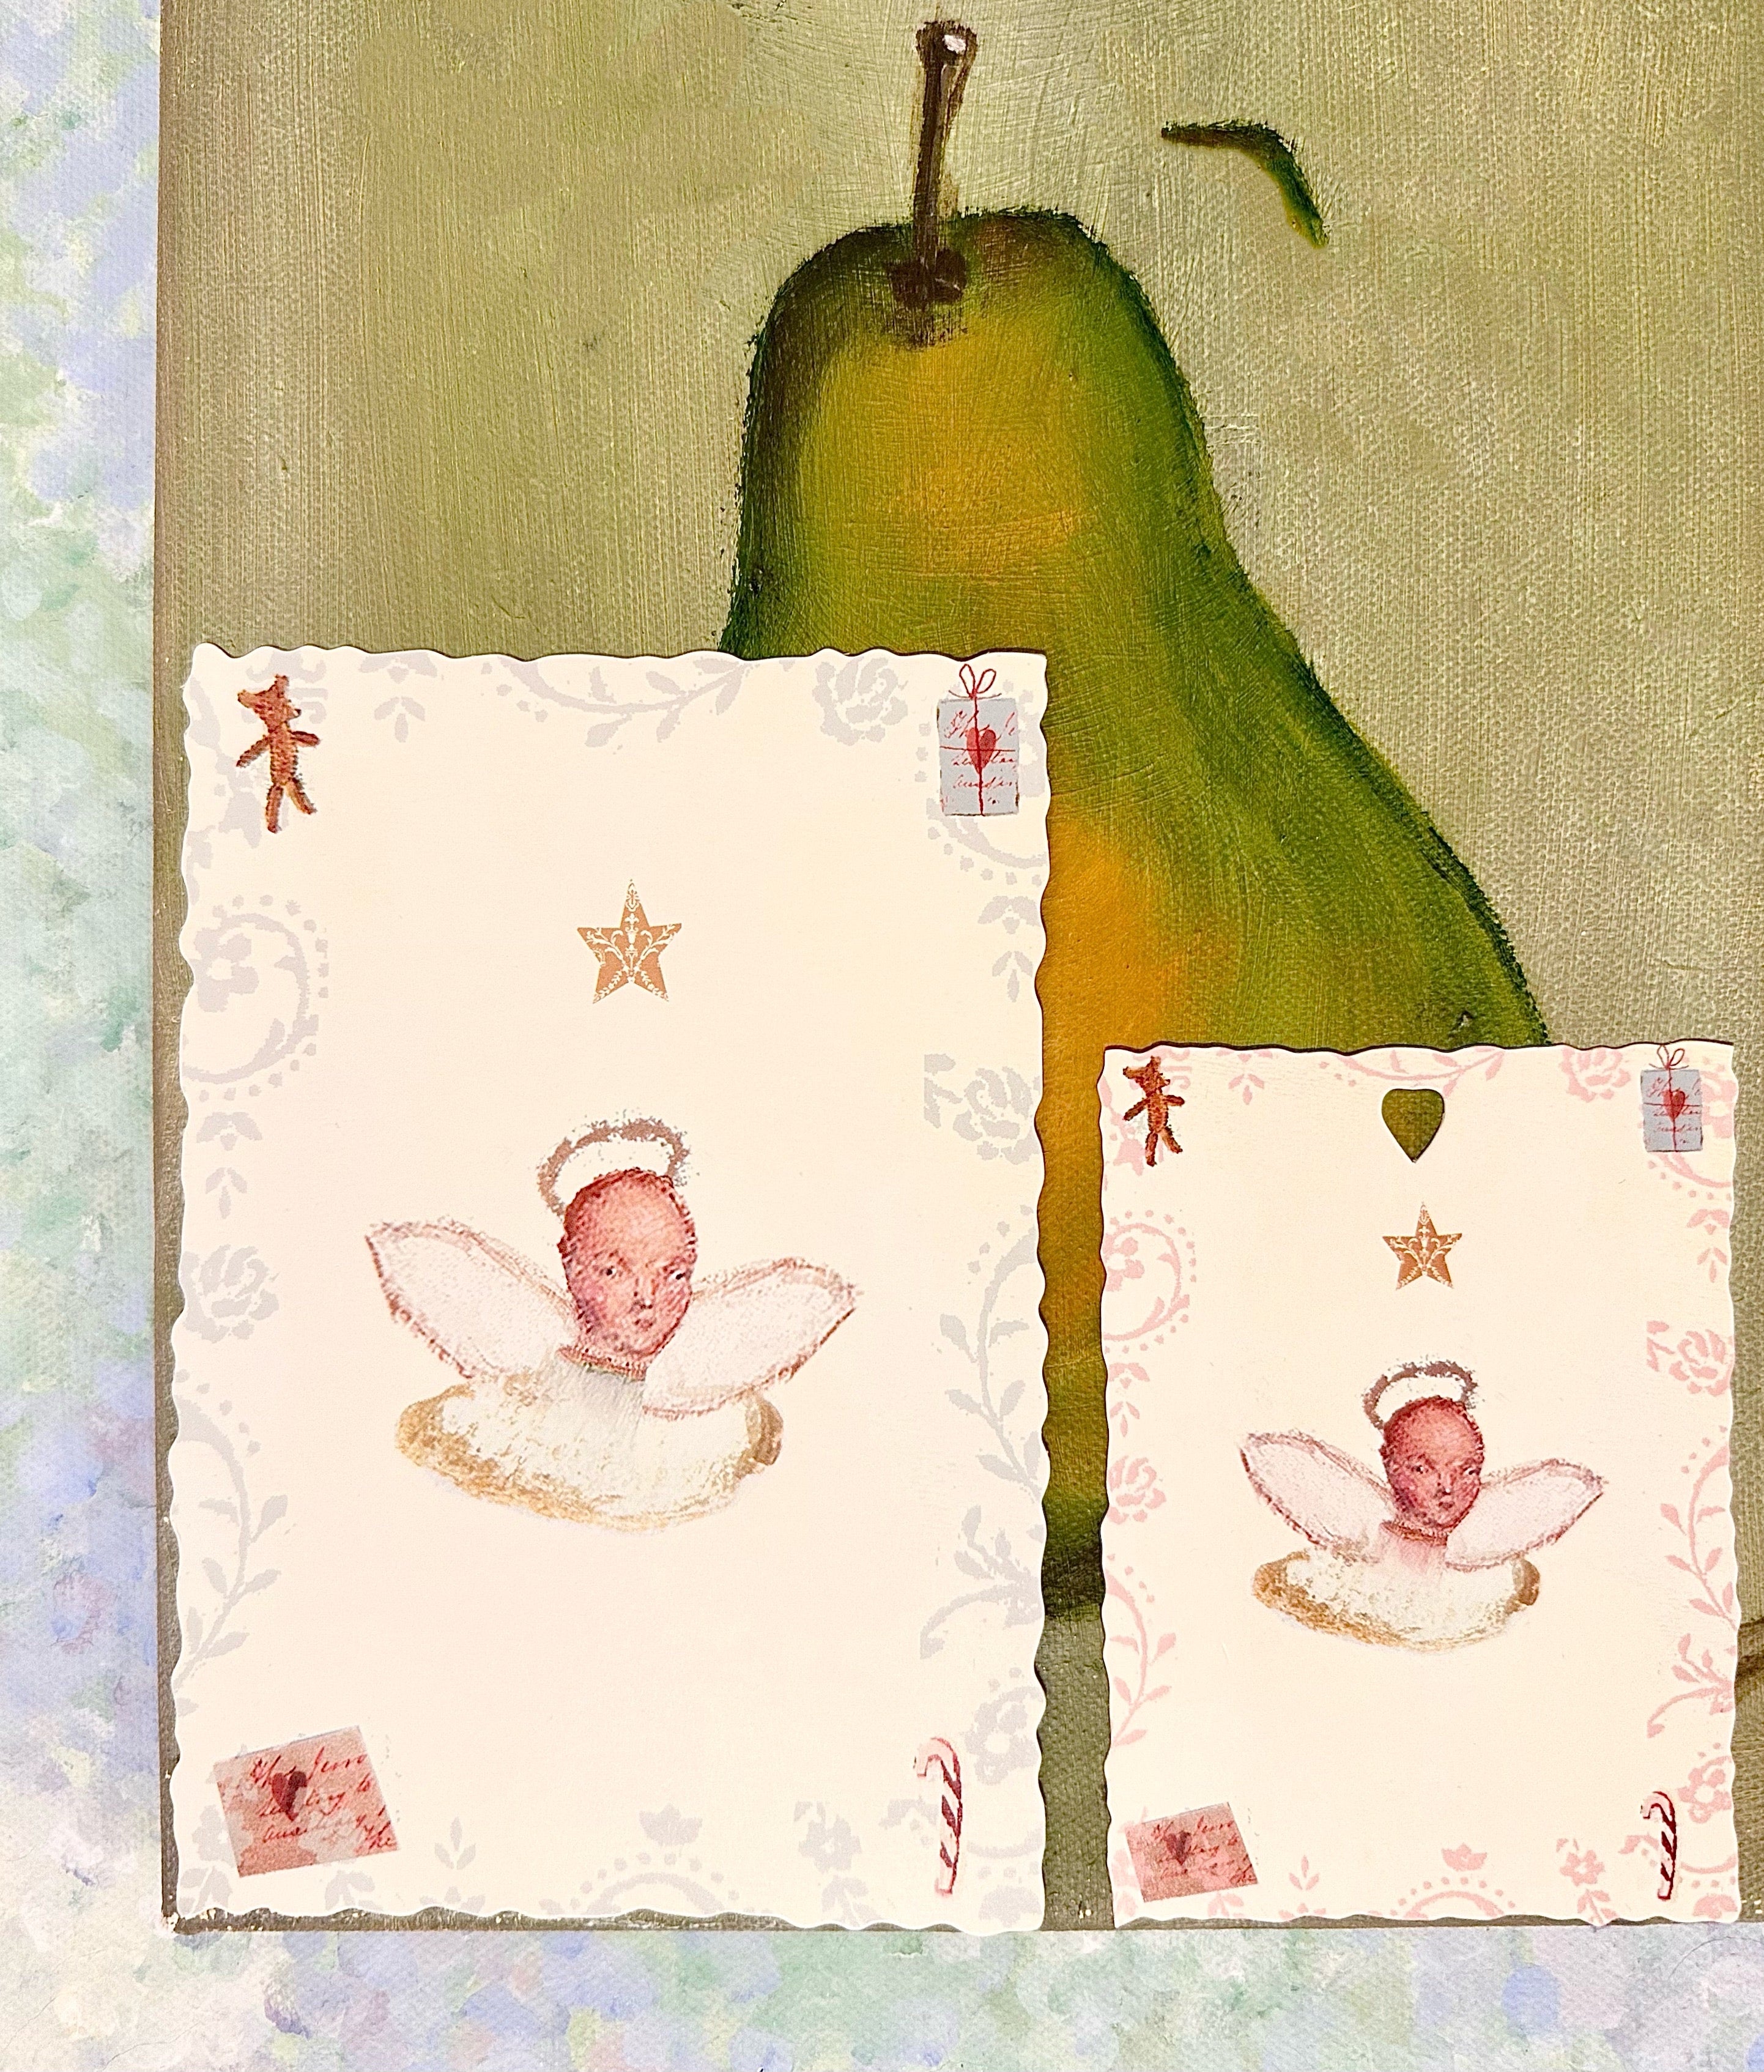 Mini Christmas Card “Angel” - 2005